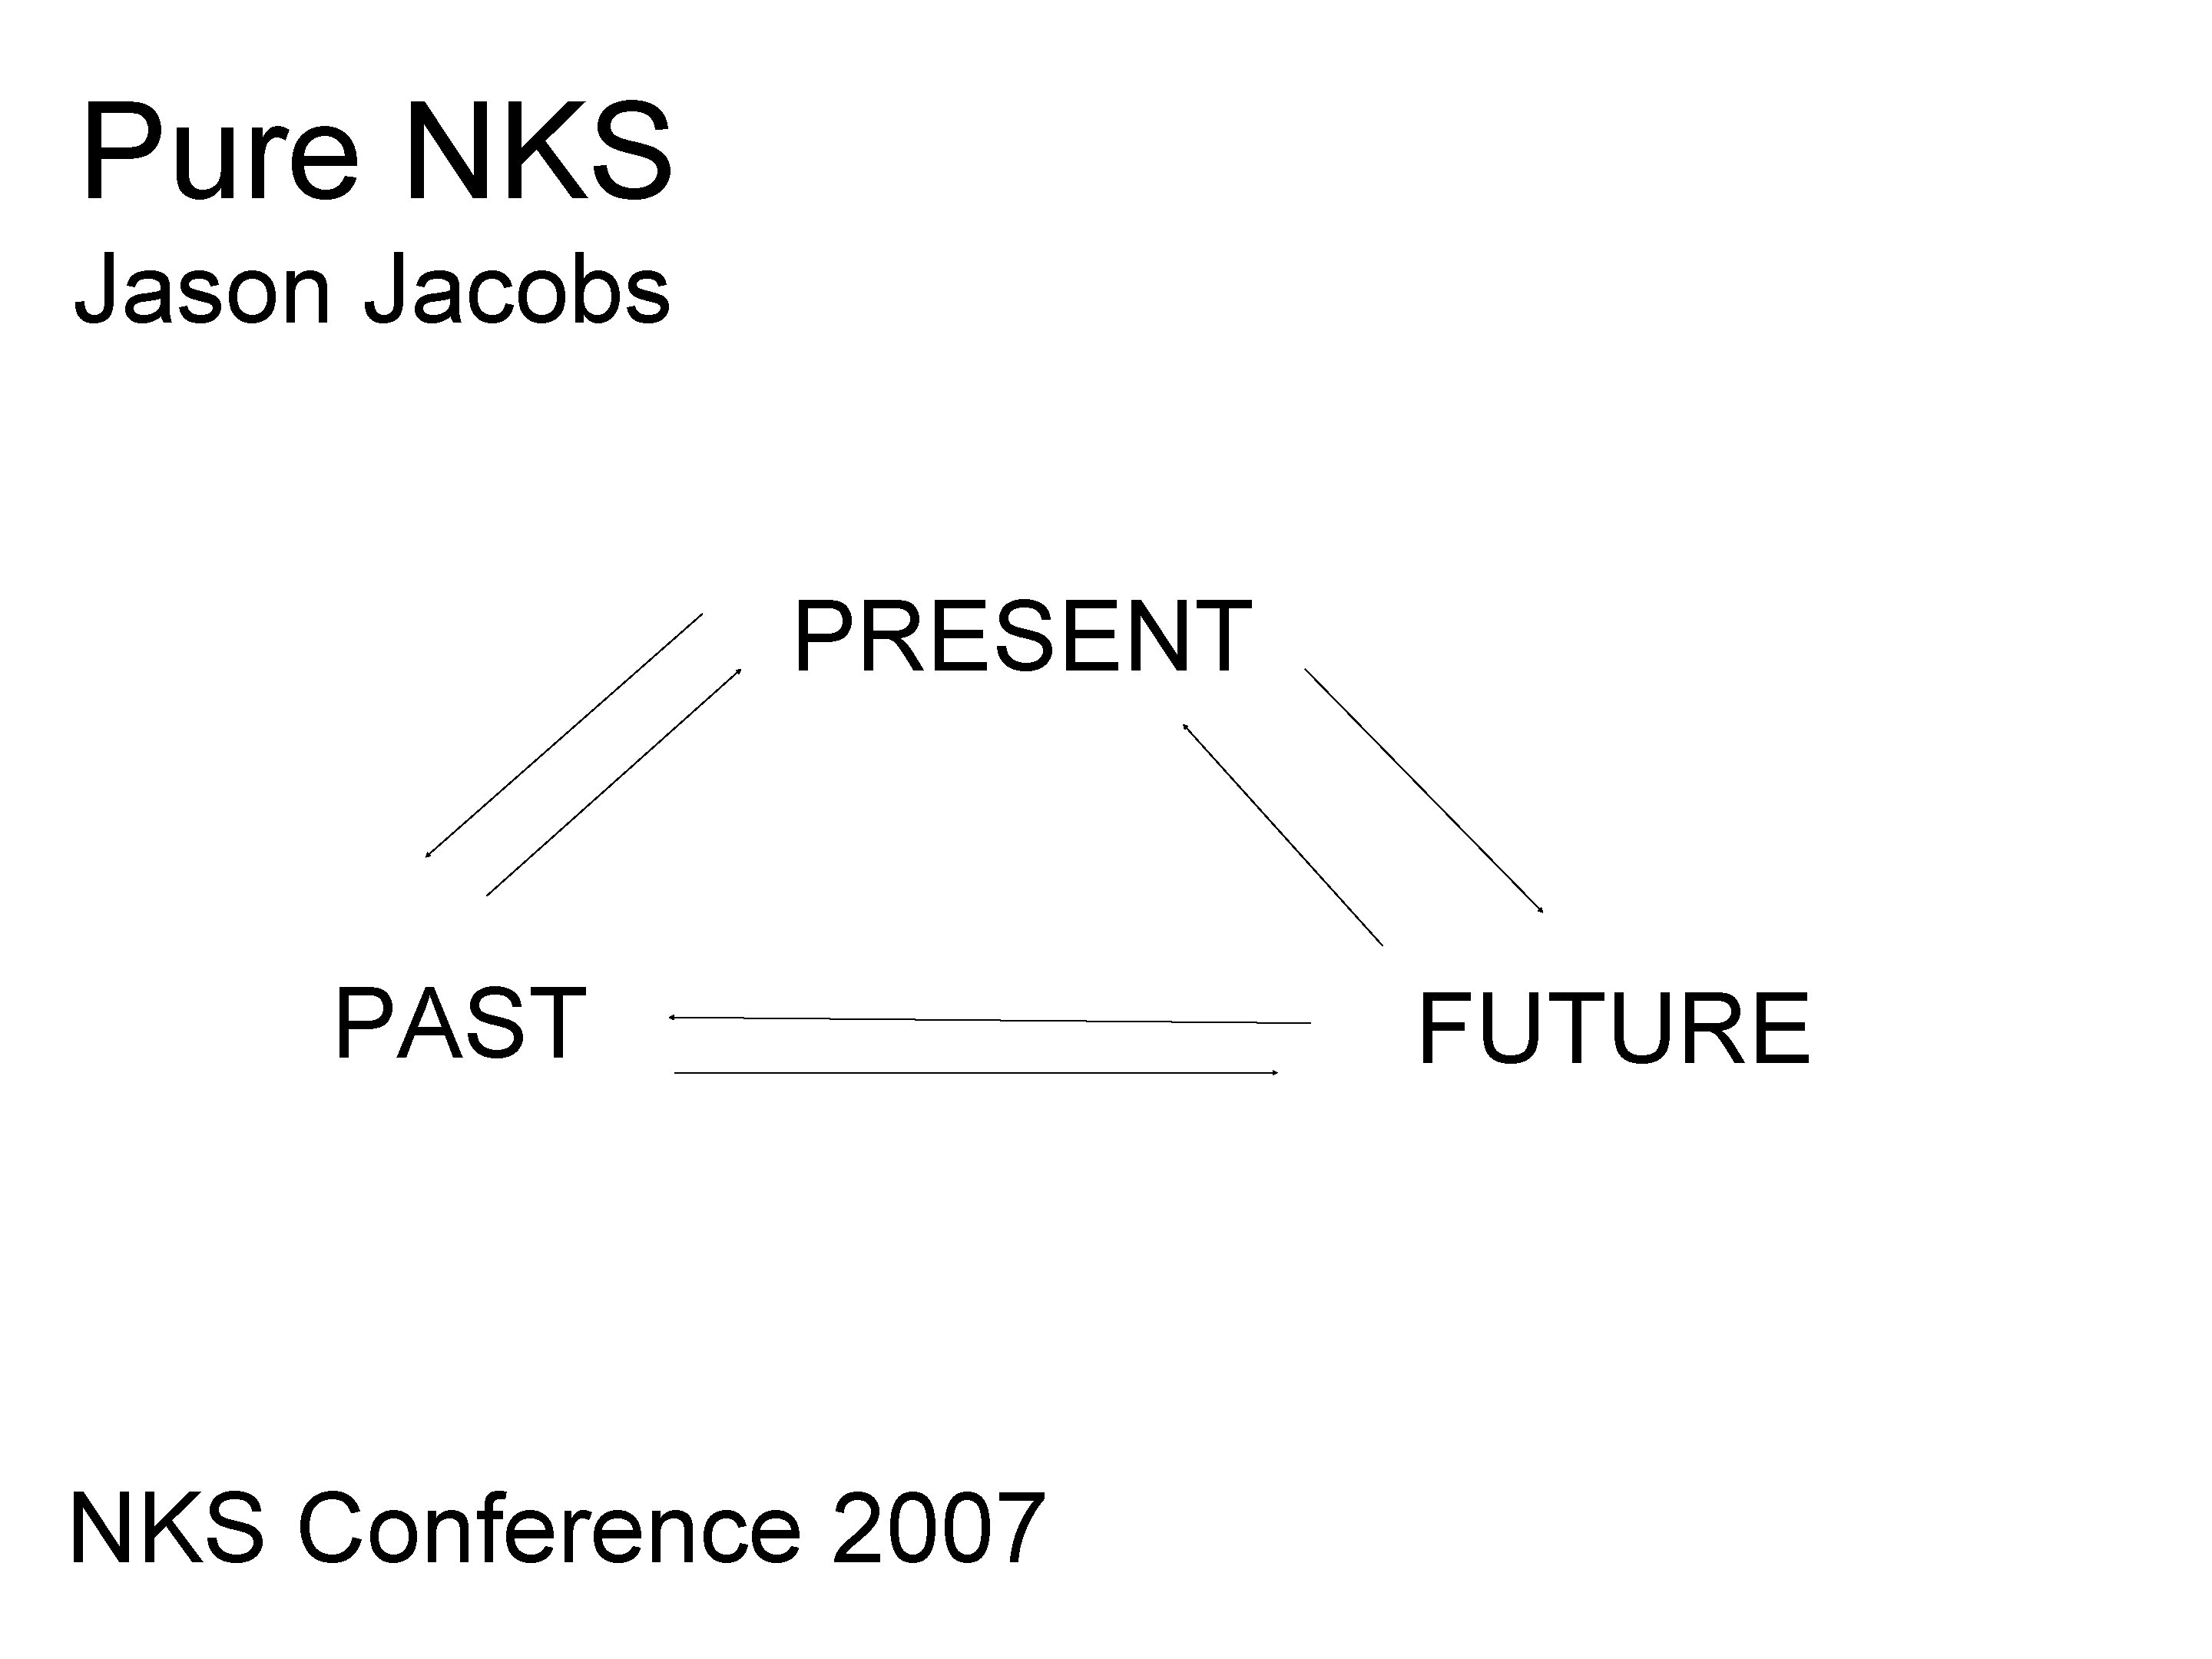 Pure NKS Jason Jacobs PRESENT PAST NKS Conference 2007 FUTURE 